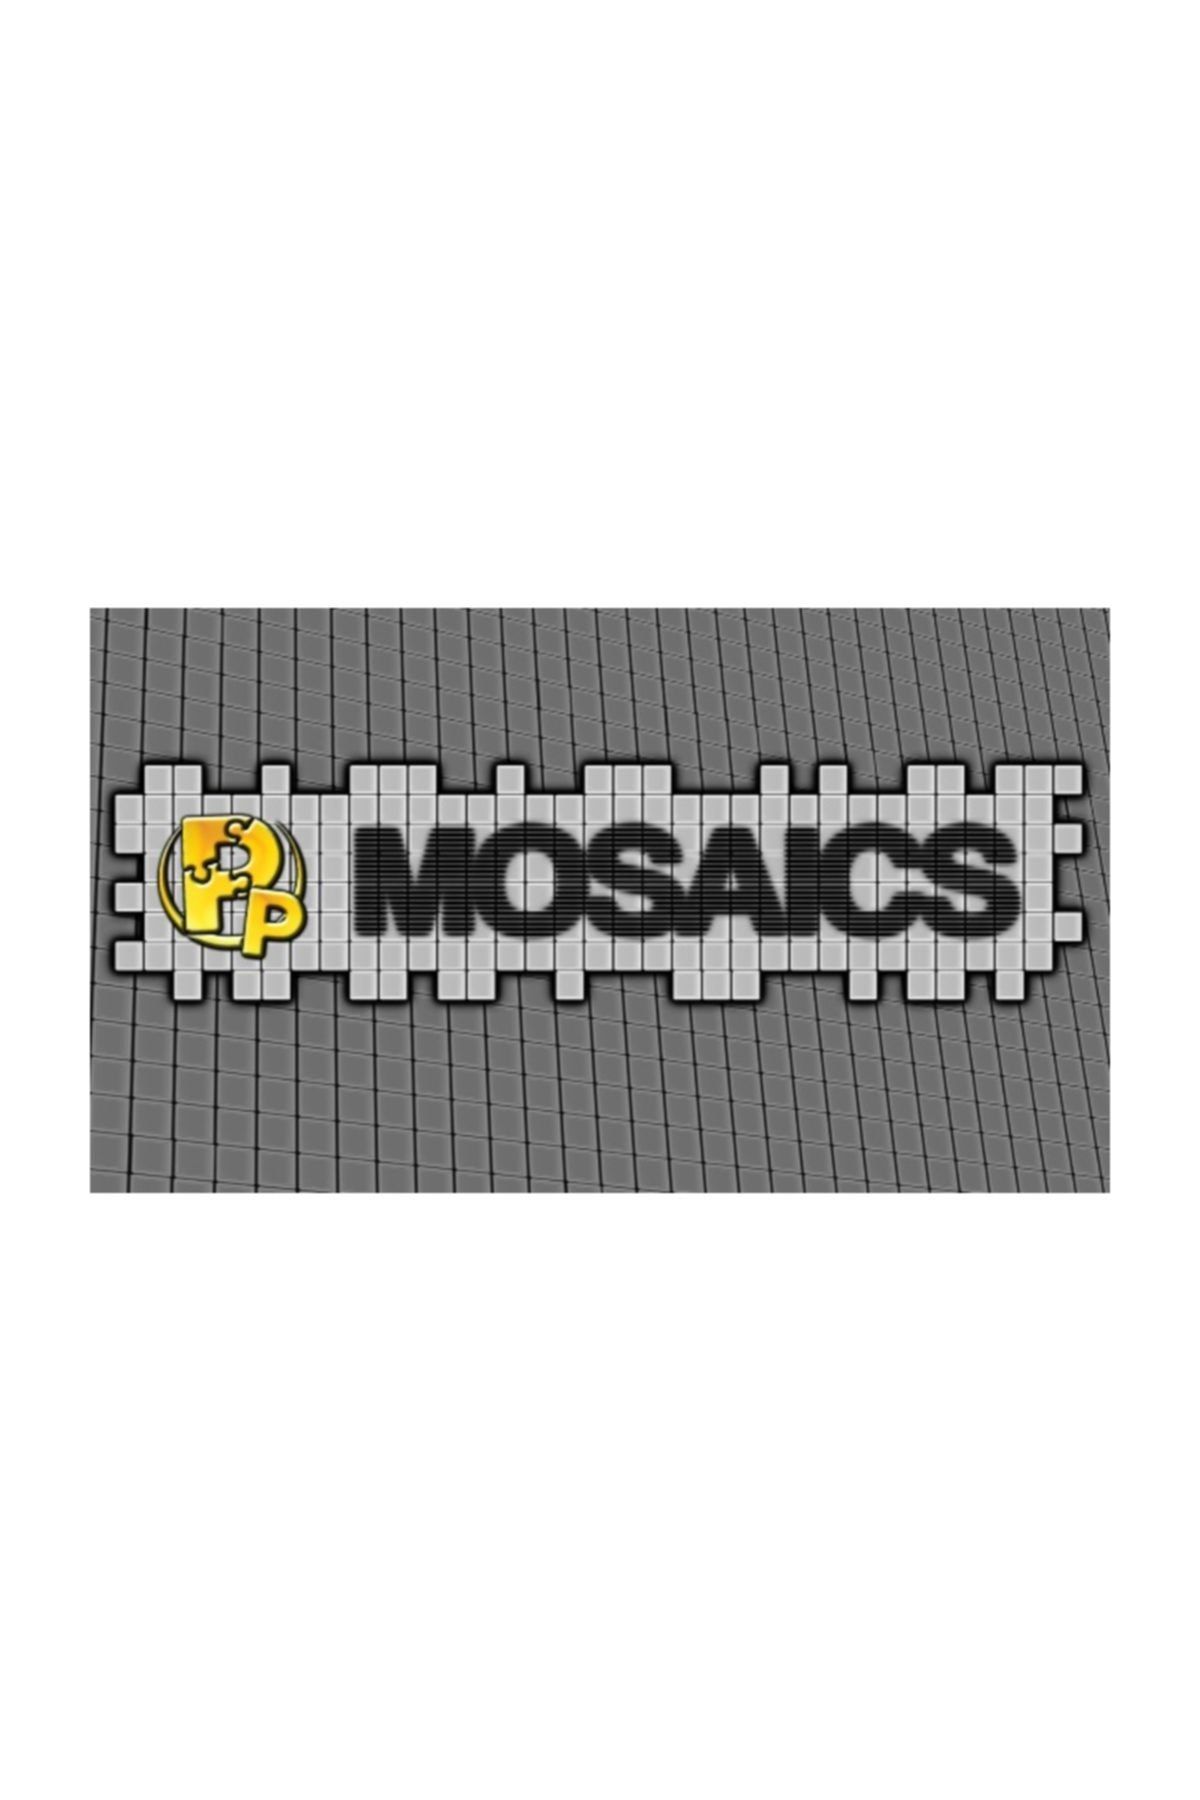 Steam Pixel Puzzles Mosaics